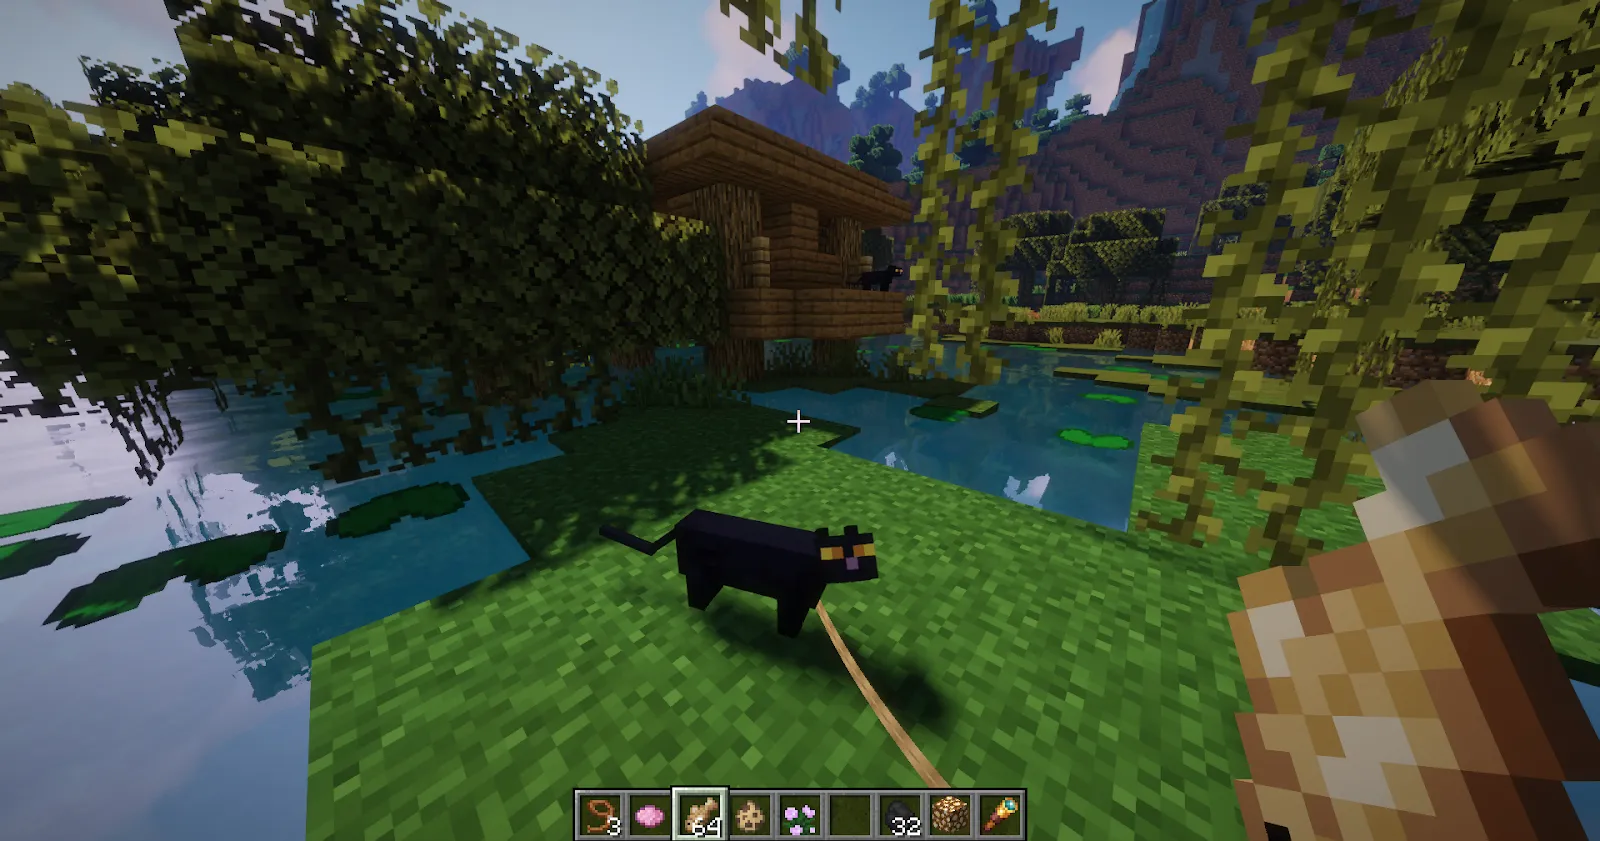 Black Minecraft cat outside swamp hut